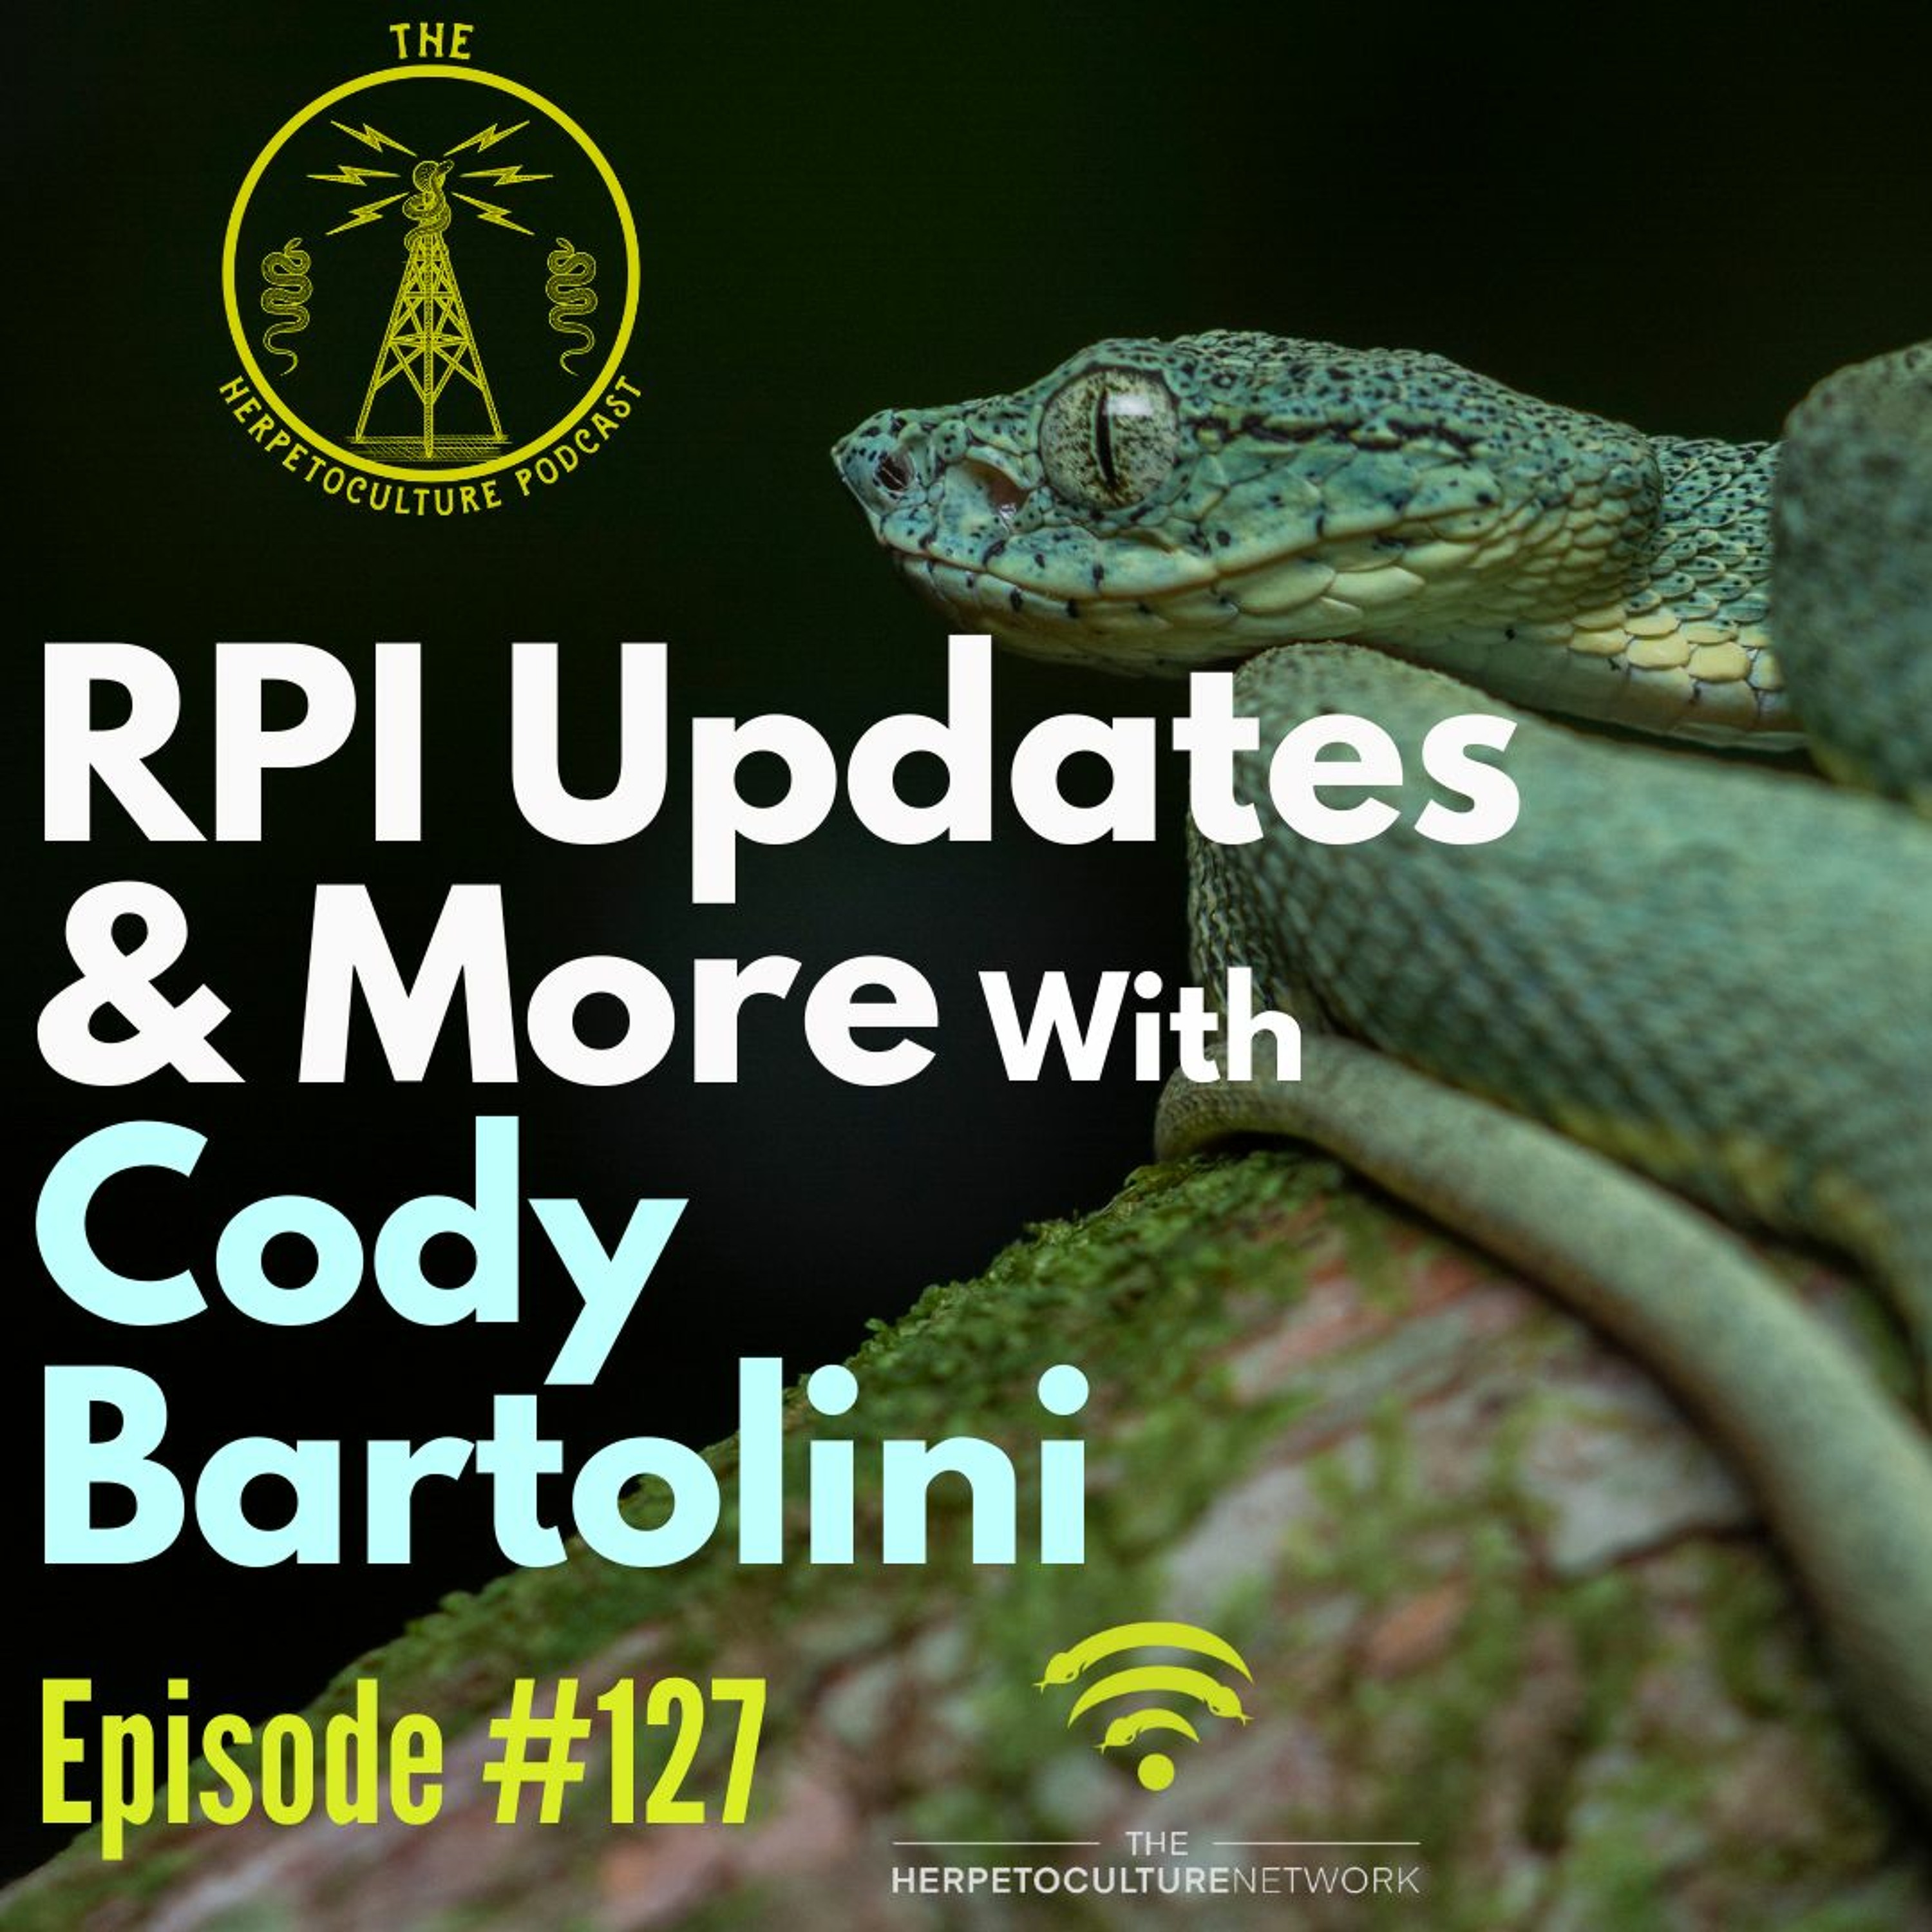 RPI updates & More with Cody Bartolini